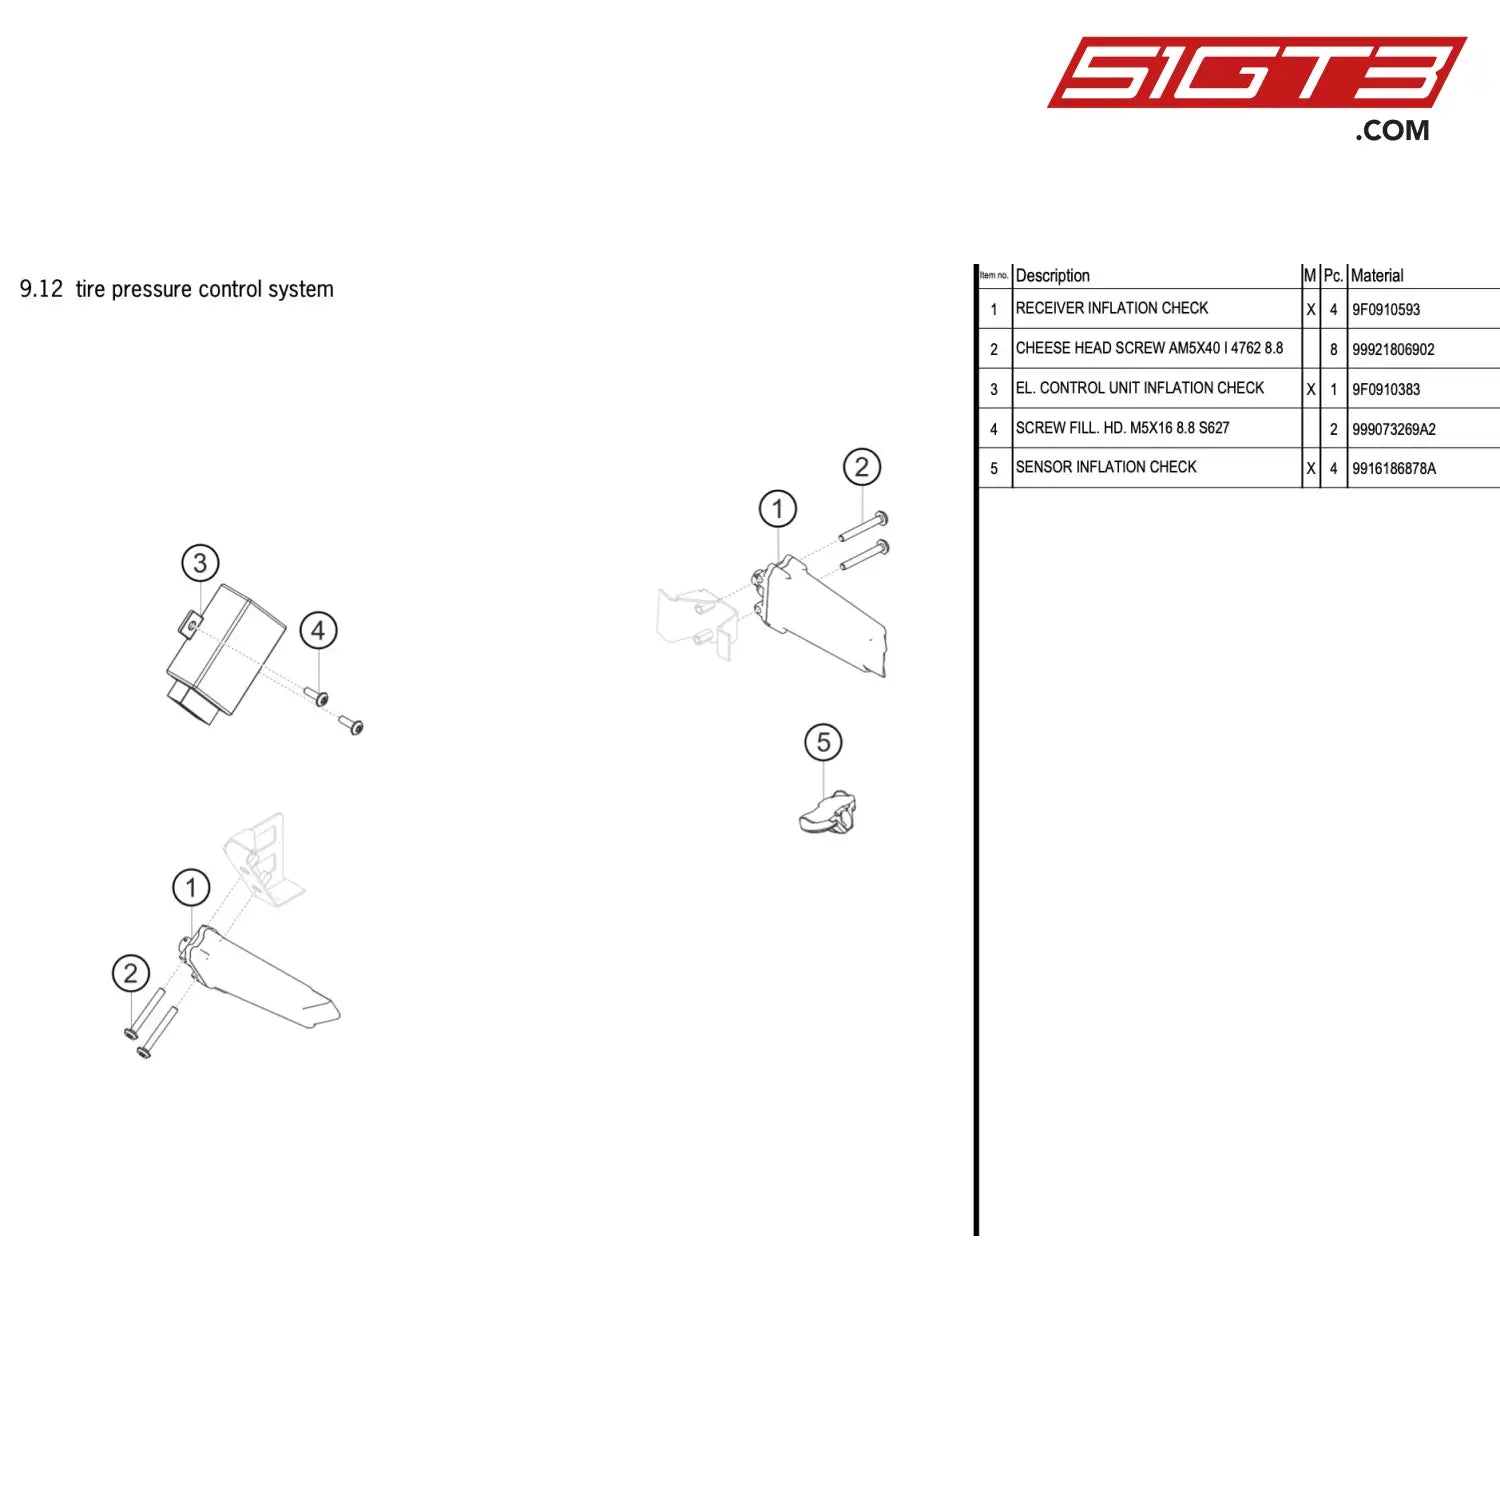 El. Control Unit Inflation Check - 9F0910383 [Porsche 911 Gt3 R Type 991 (Gen 2)] Tire Pressure